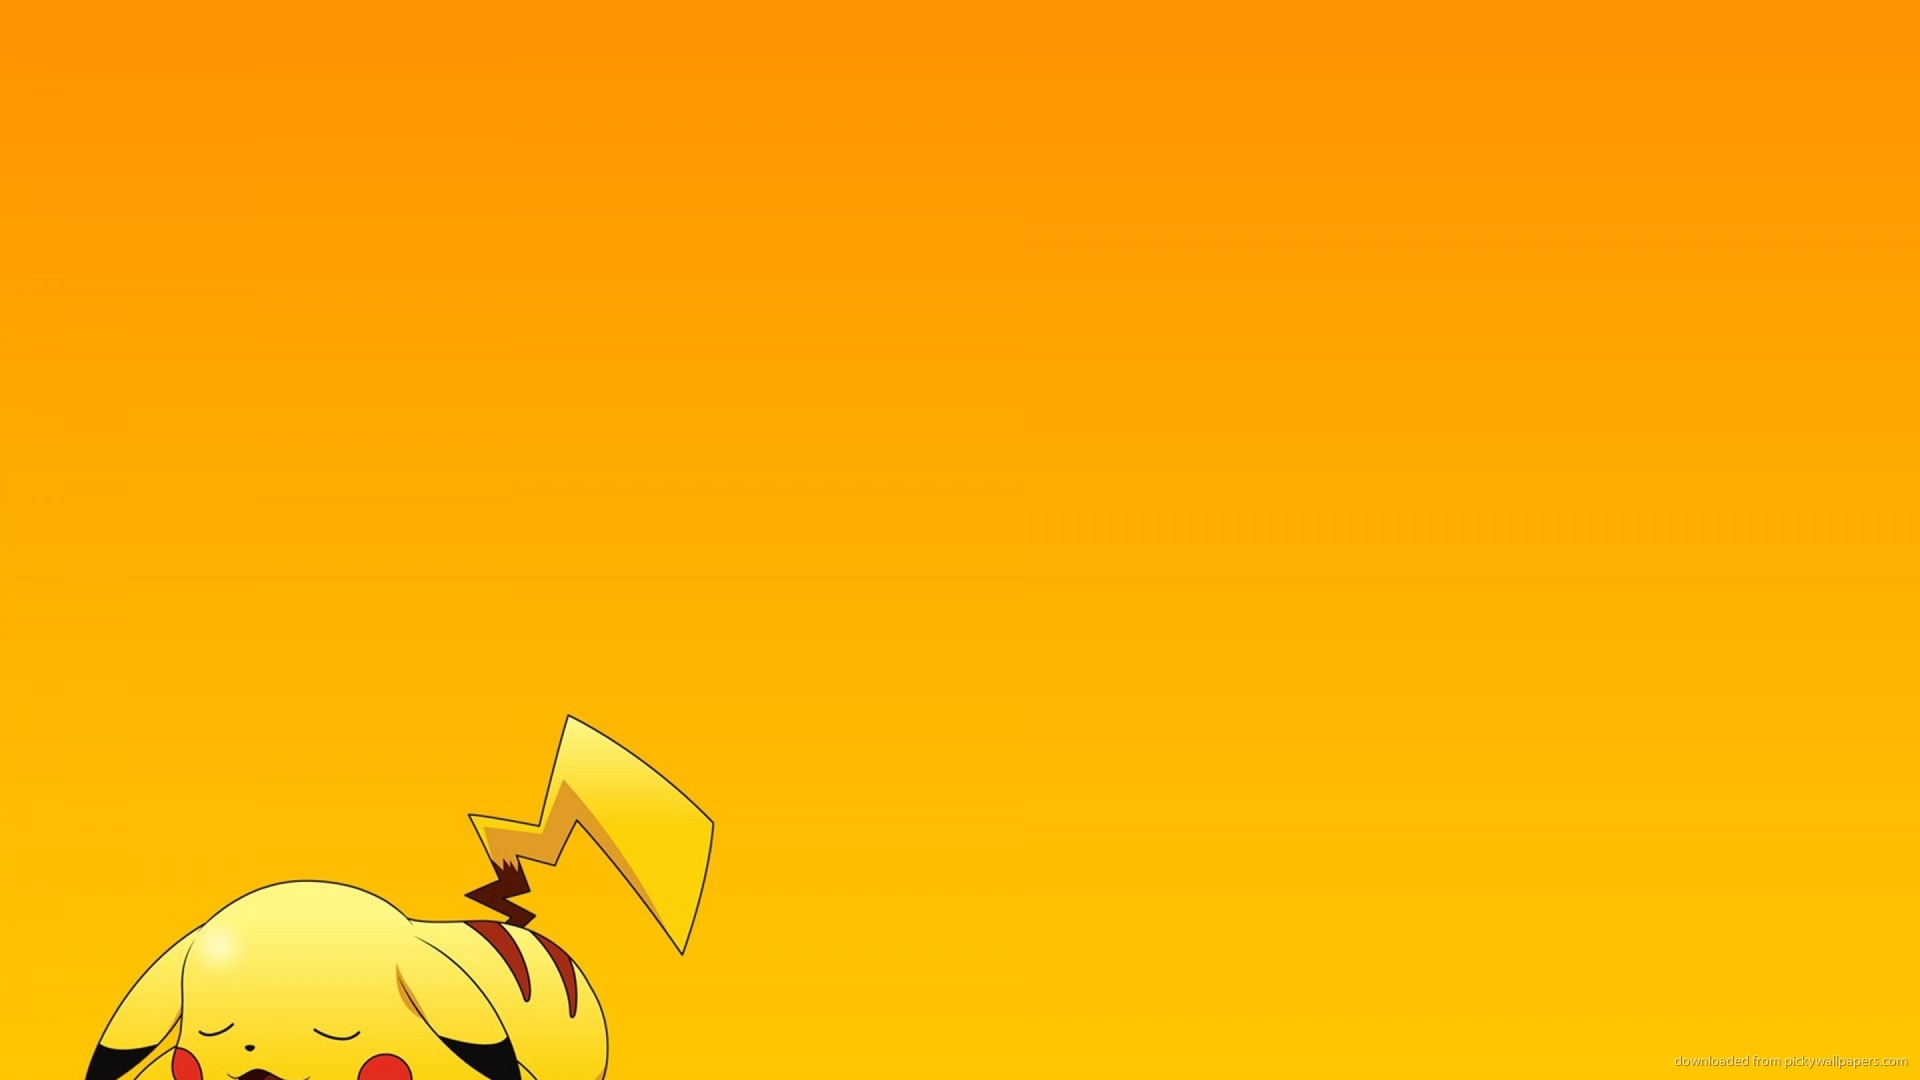 Sleeping Pikachu Wallpaper For